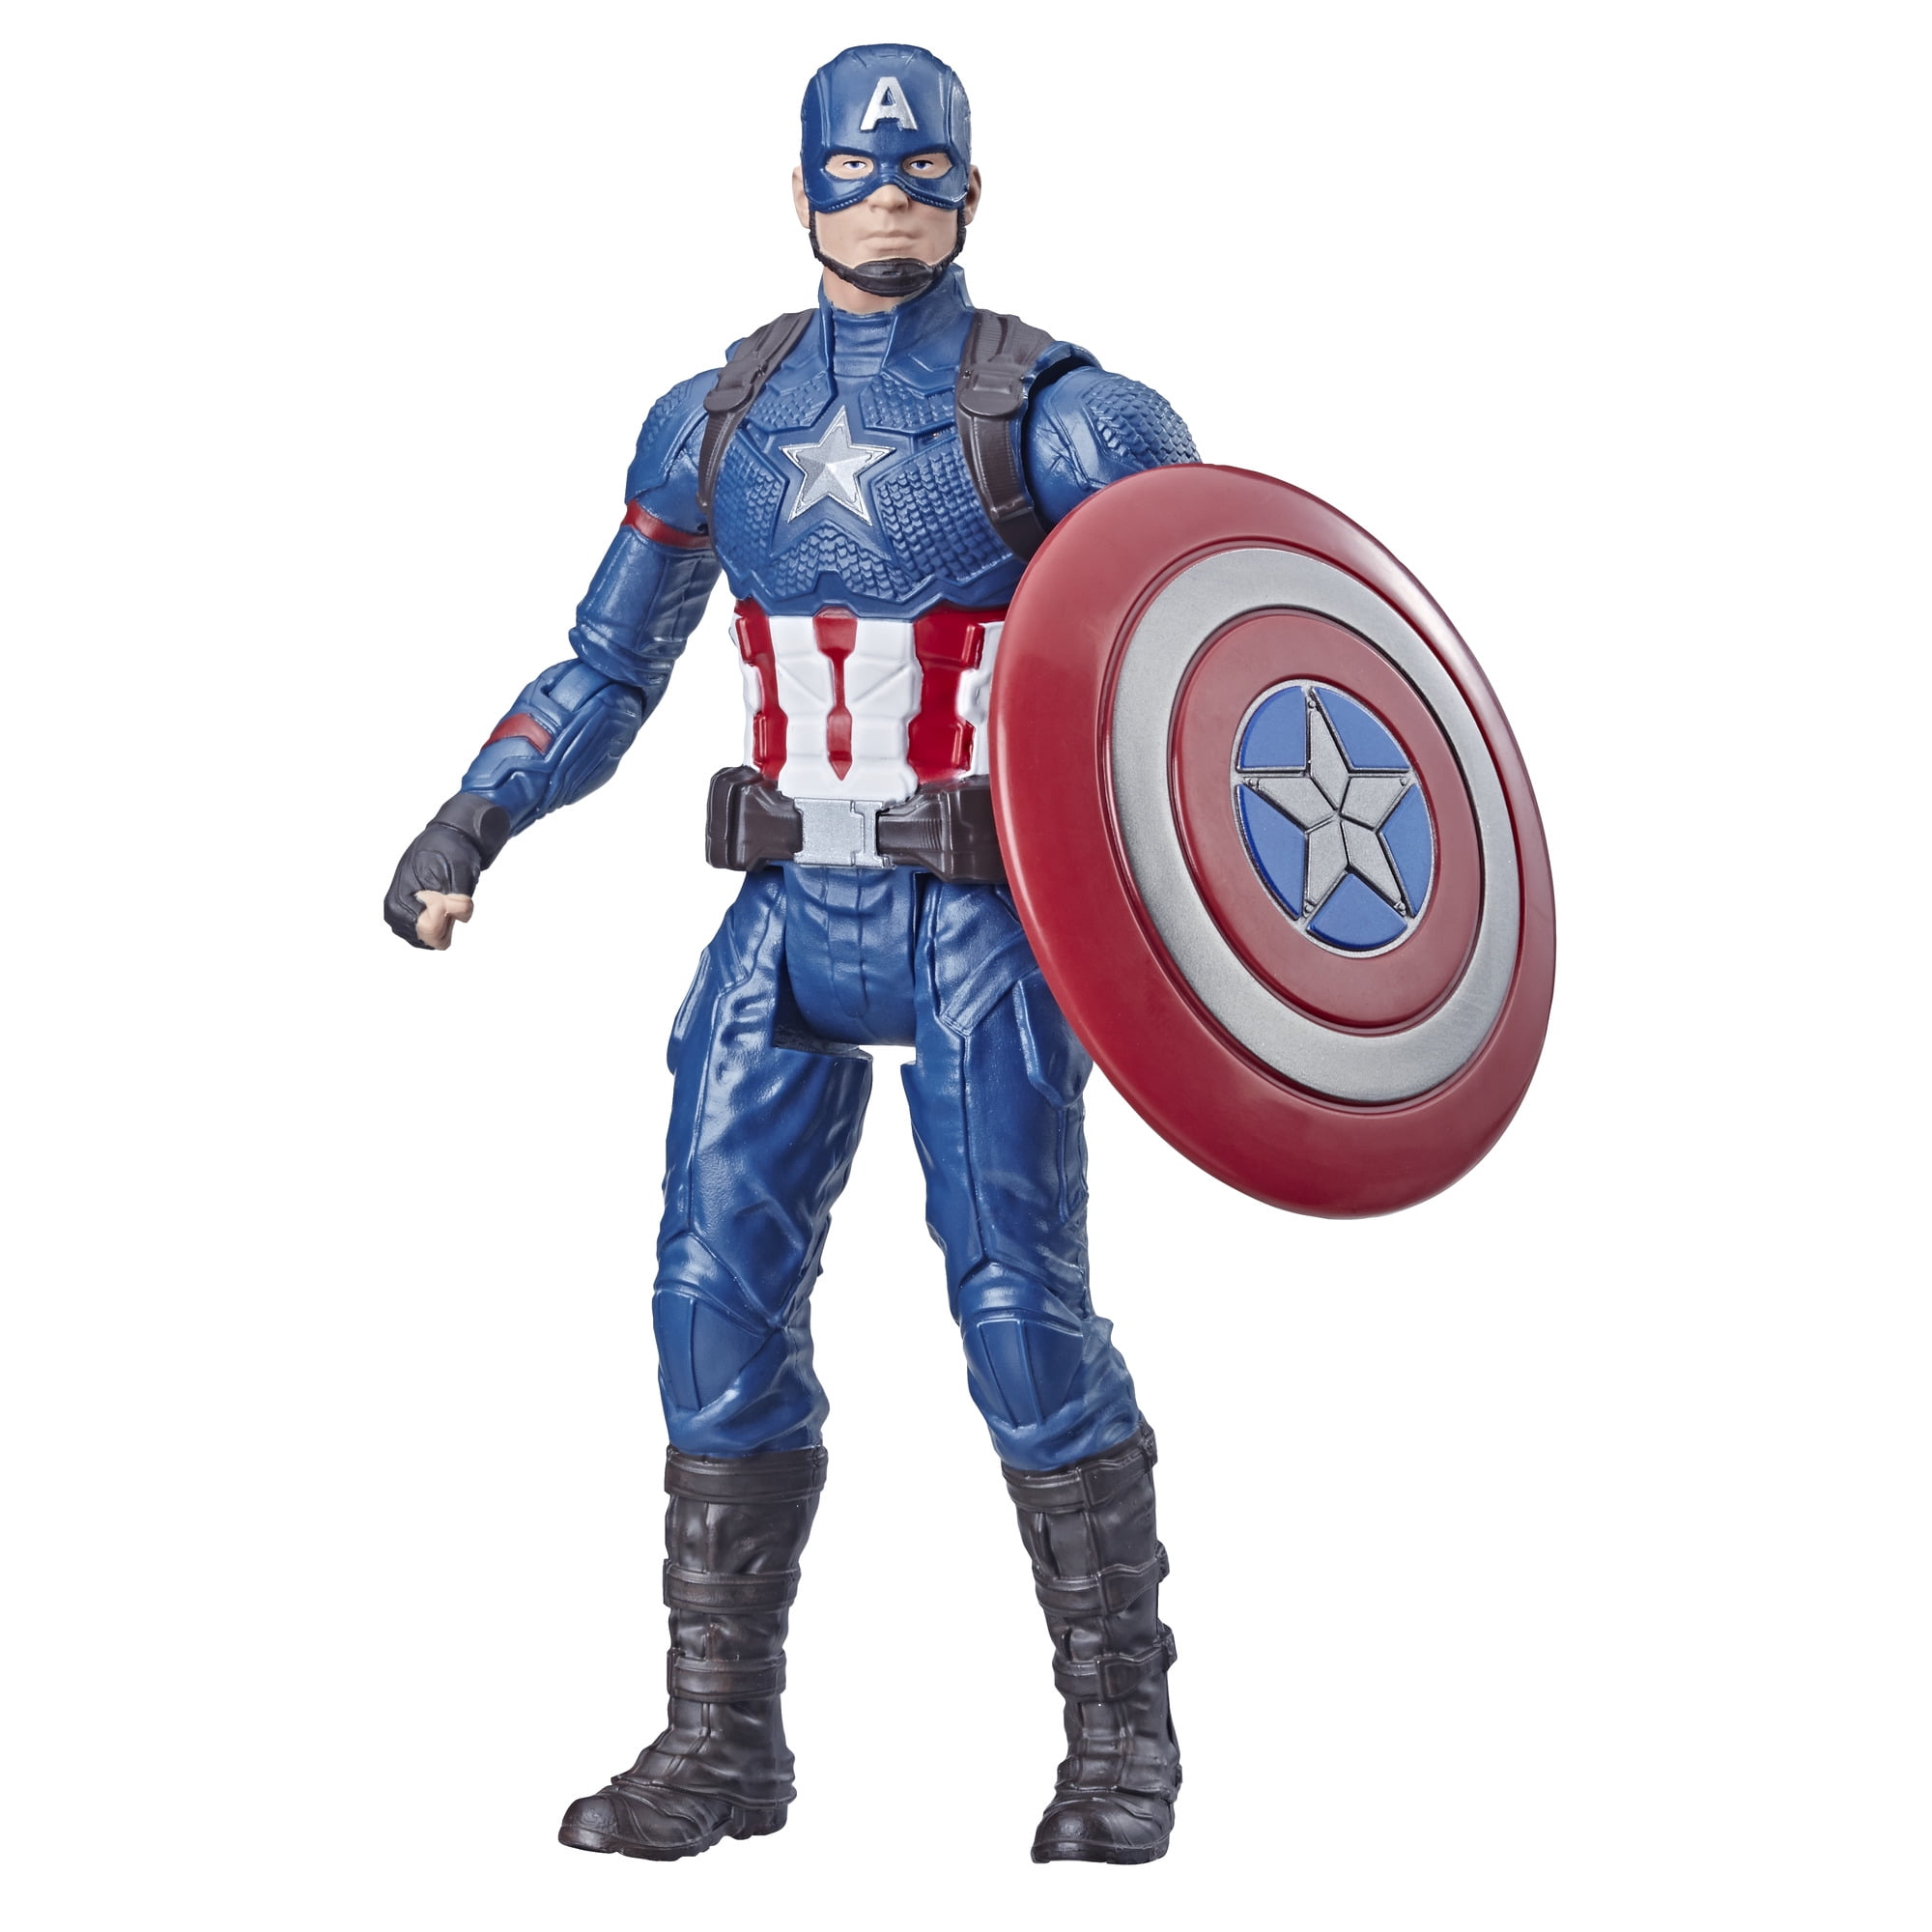 Captain America 11.5" Talking Tech Action Figure Hasbro, 2015 